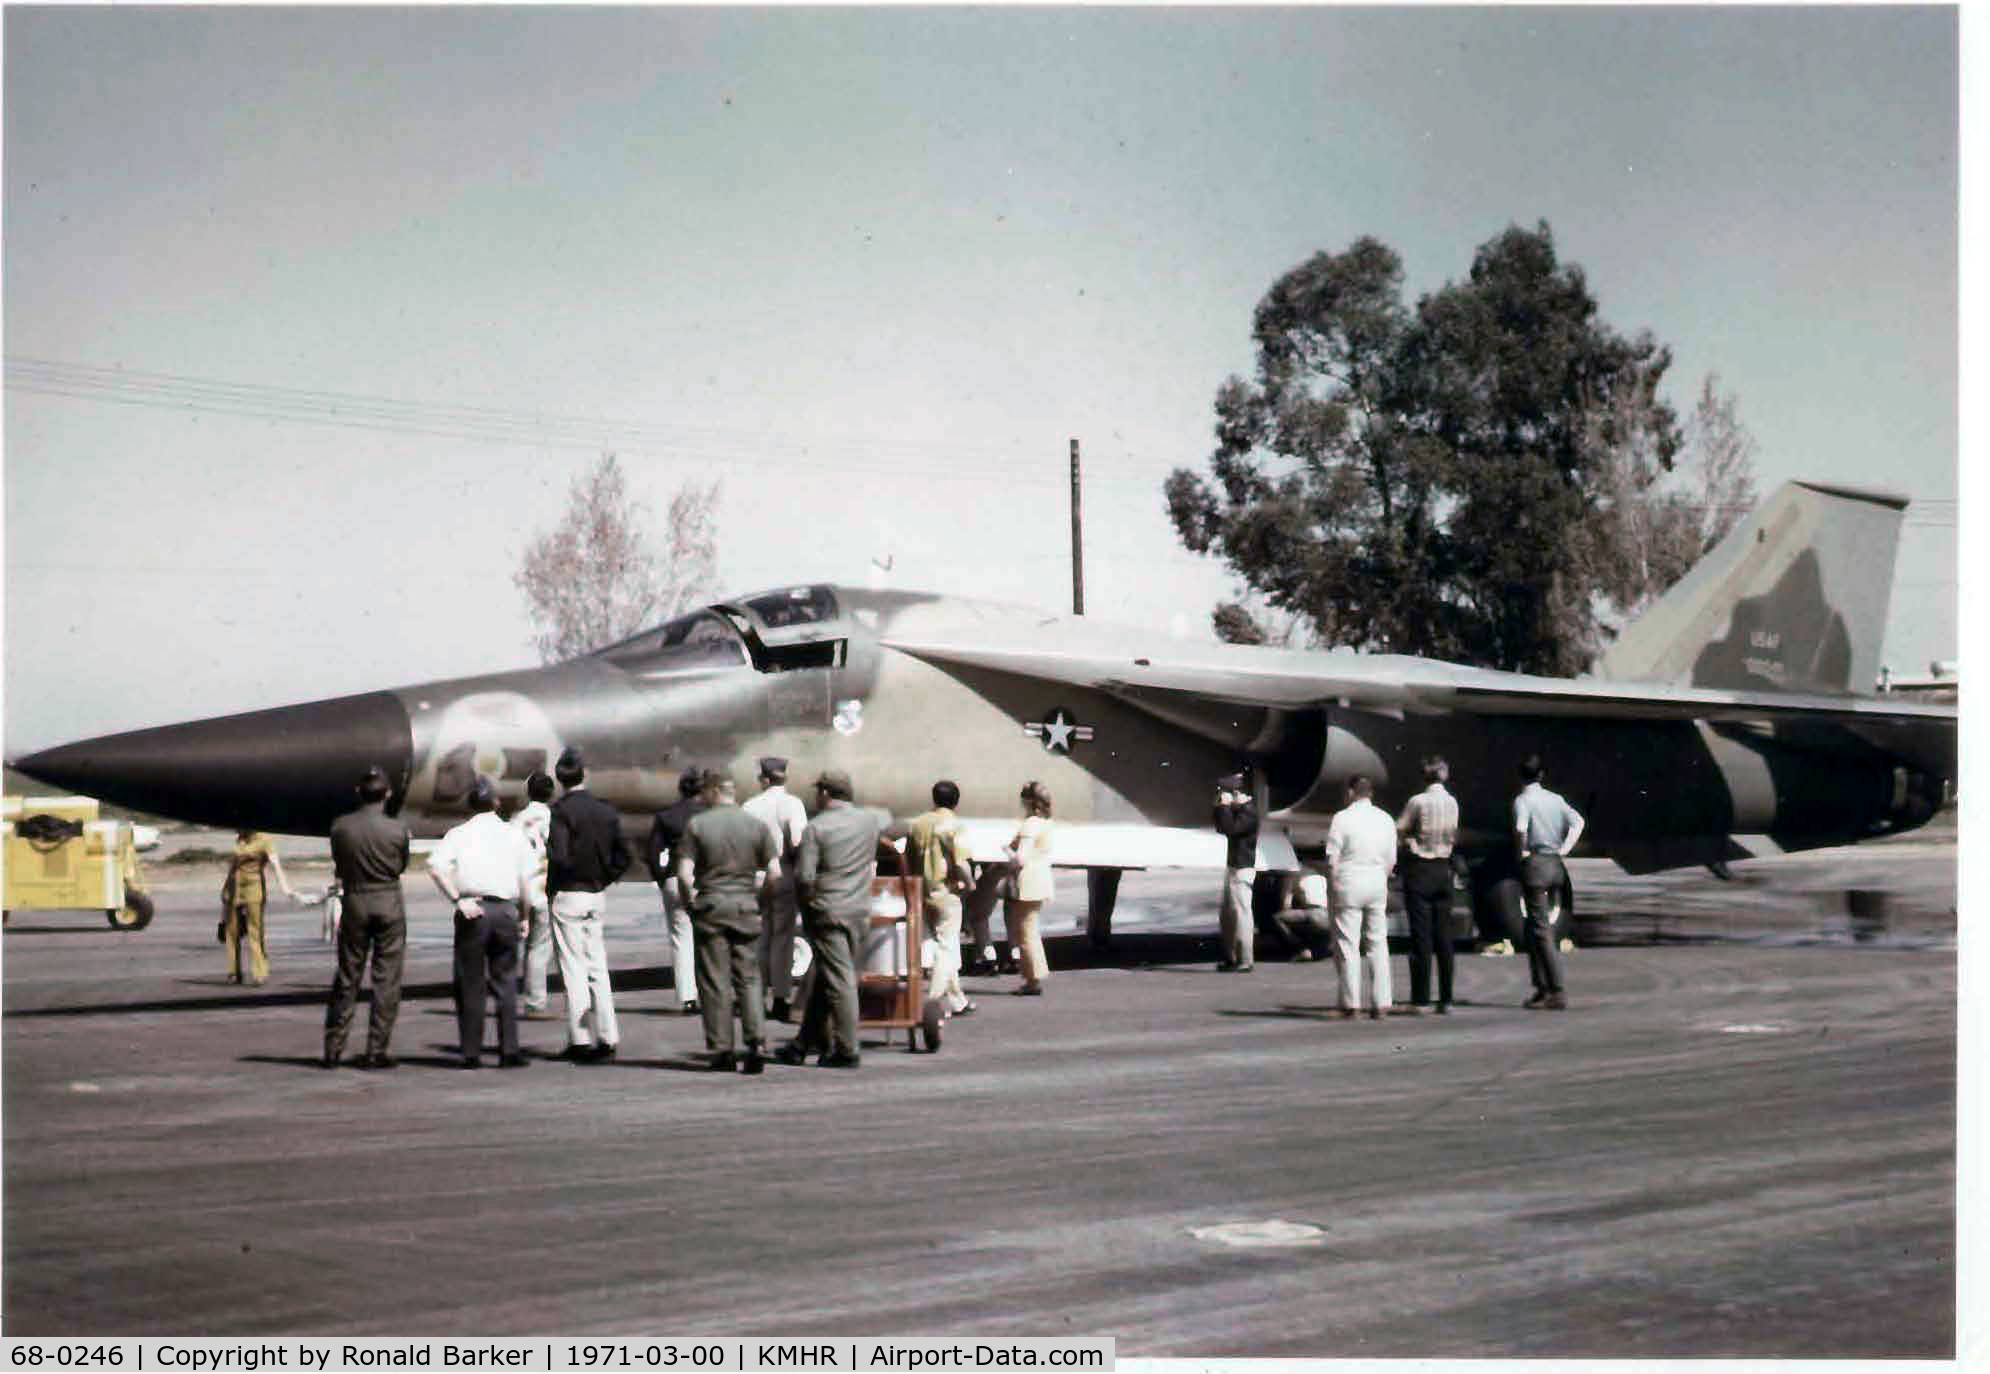 68-0246, 1968 General Dynamics FB-111A C/N B1-17, On display Mather